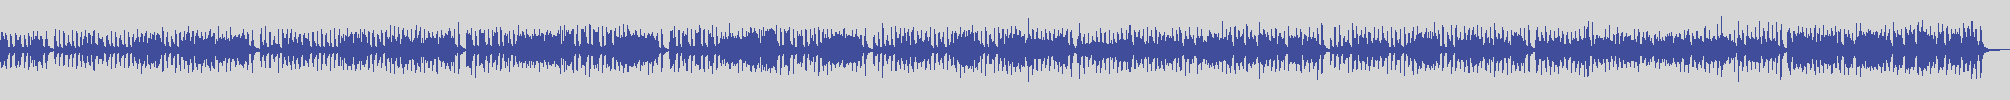 digiphonic_records [DPR011] Orchestra Spettacolo Romagna Folk - Mascotte [Original Mix] audio wave form